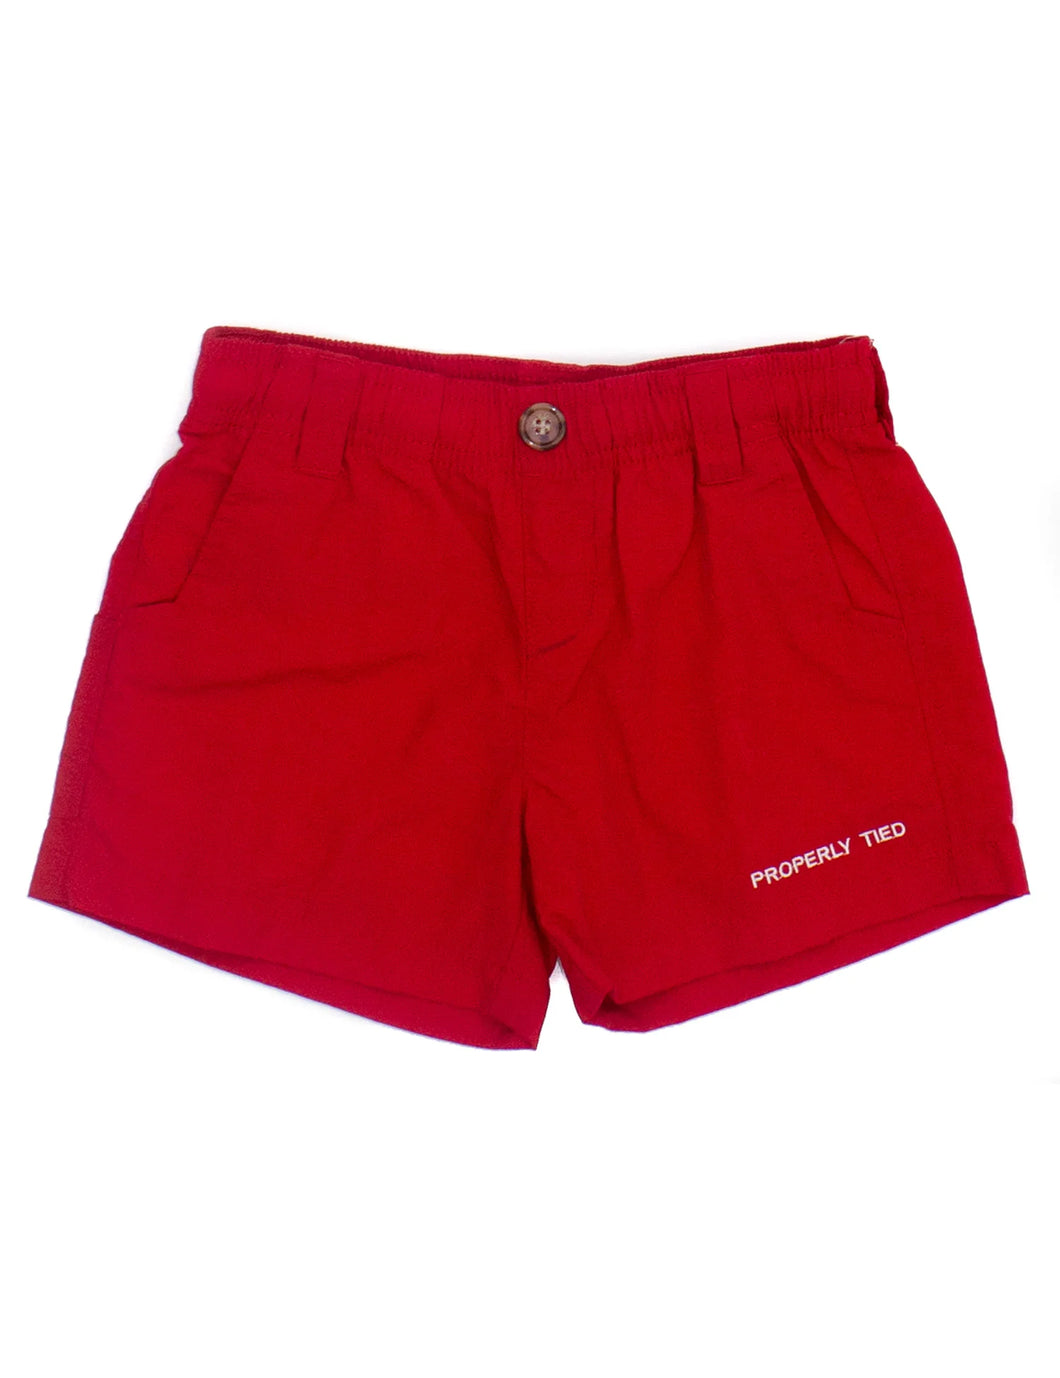 Properly Tied - Red- Mallard Shorts